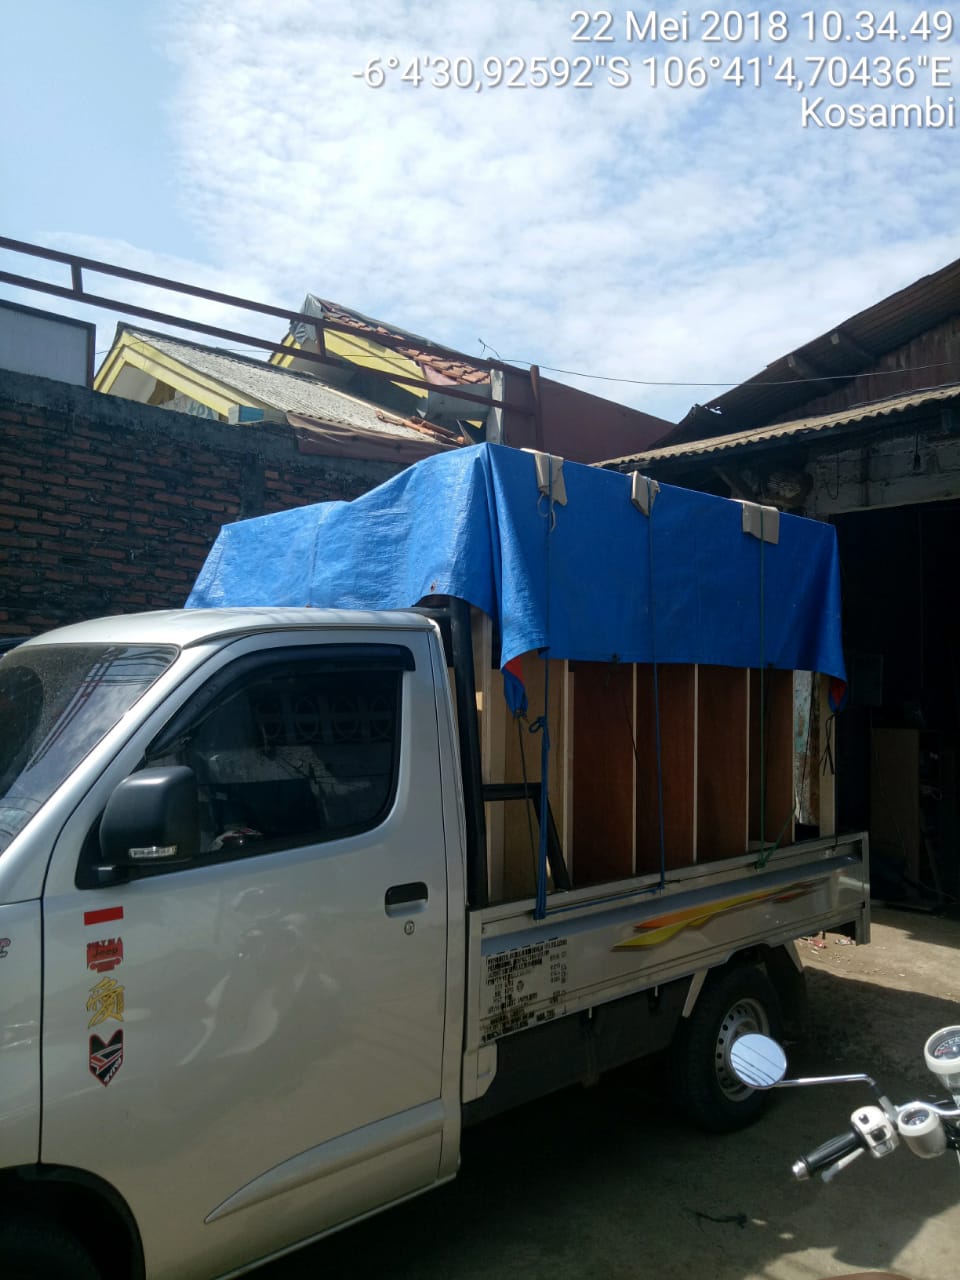 Sewa rental mobil pick up pindahan rumah Kosambi Tangerang